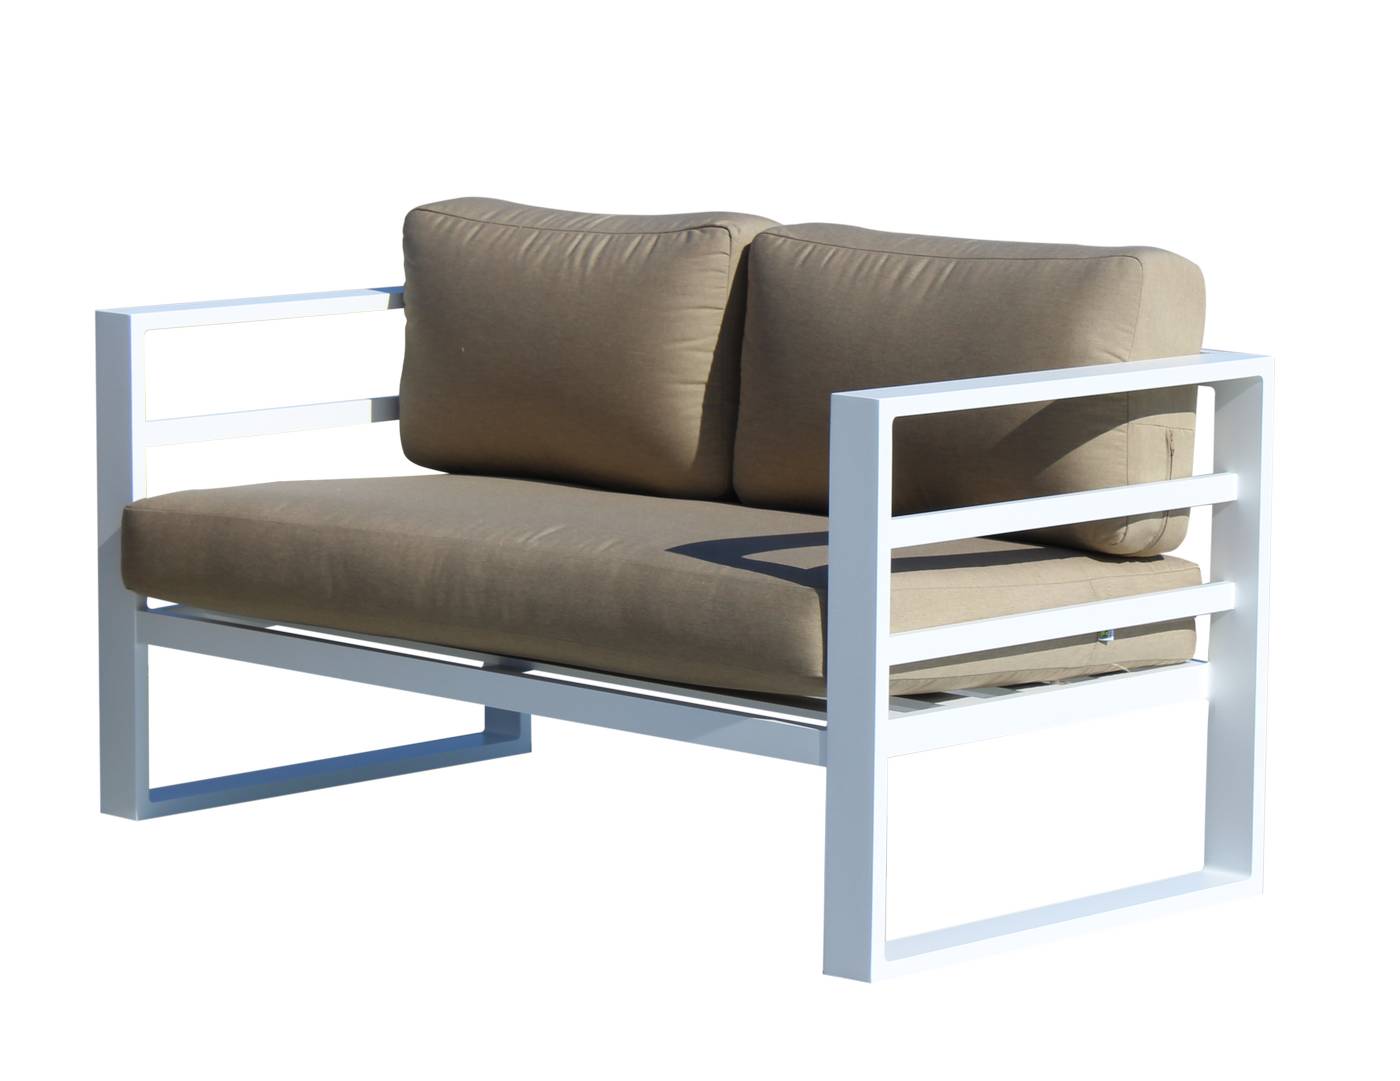 Set Aluminio Dalas-9 - Conjunto de aluminio para jardín o terraza: sofá 2 plazas + 2 sillones + mesa de centro + 2 taburetes. Disponible en color blanco, antracita, champagne, plata o marrón.